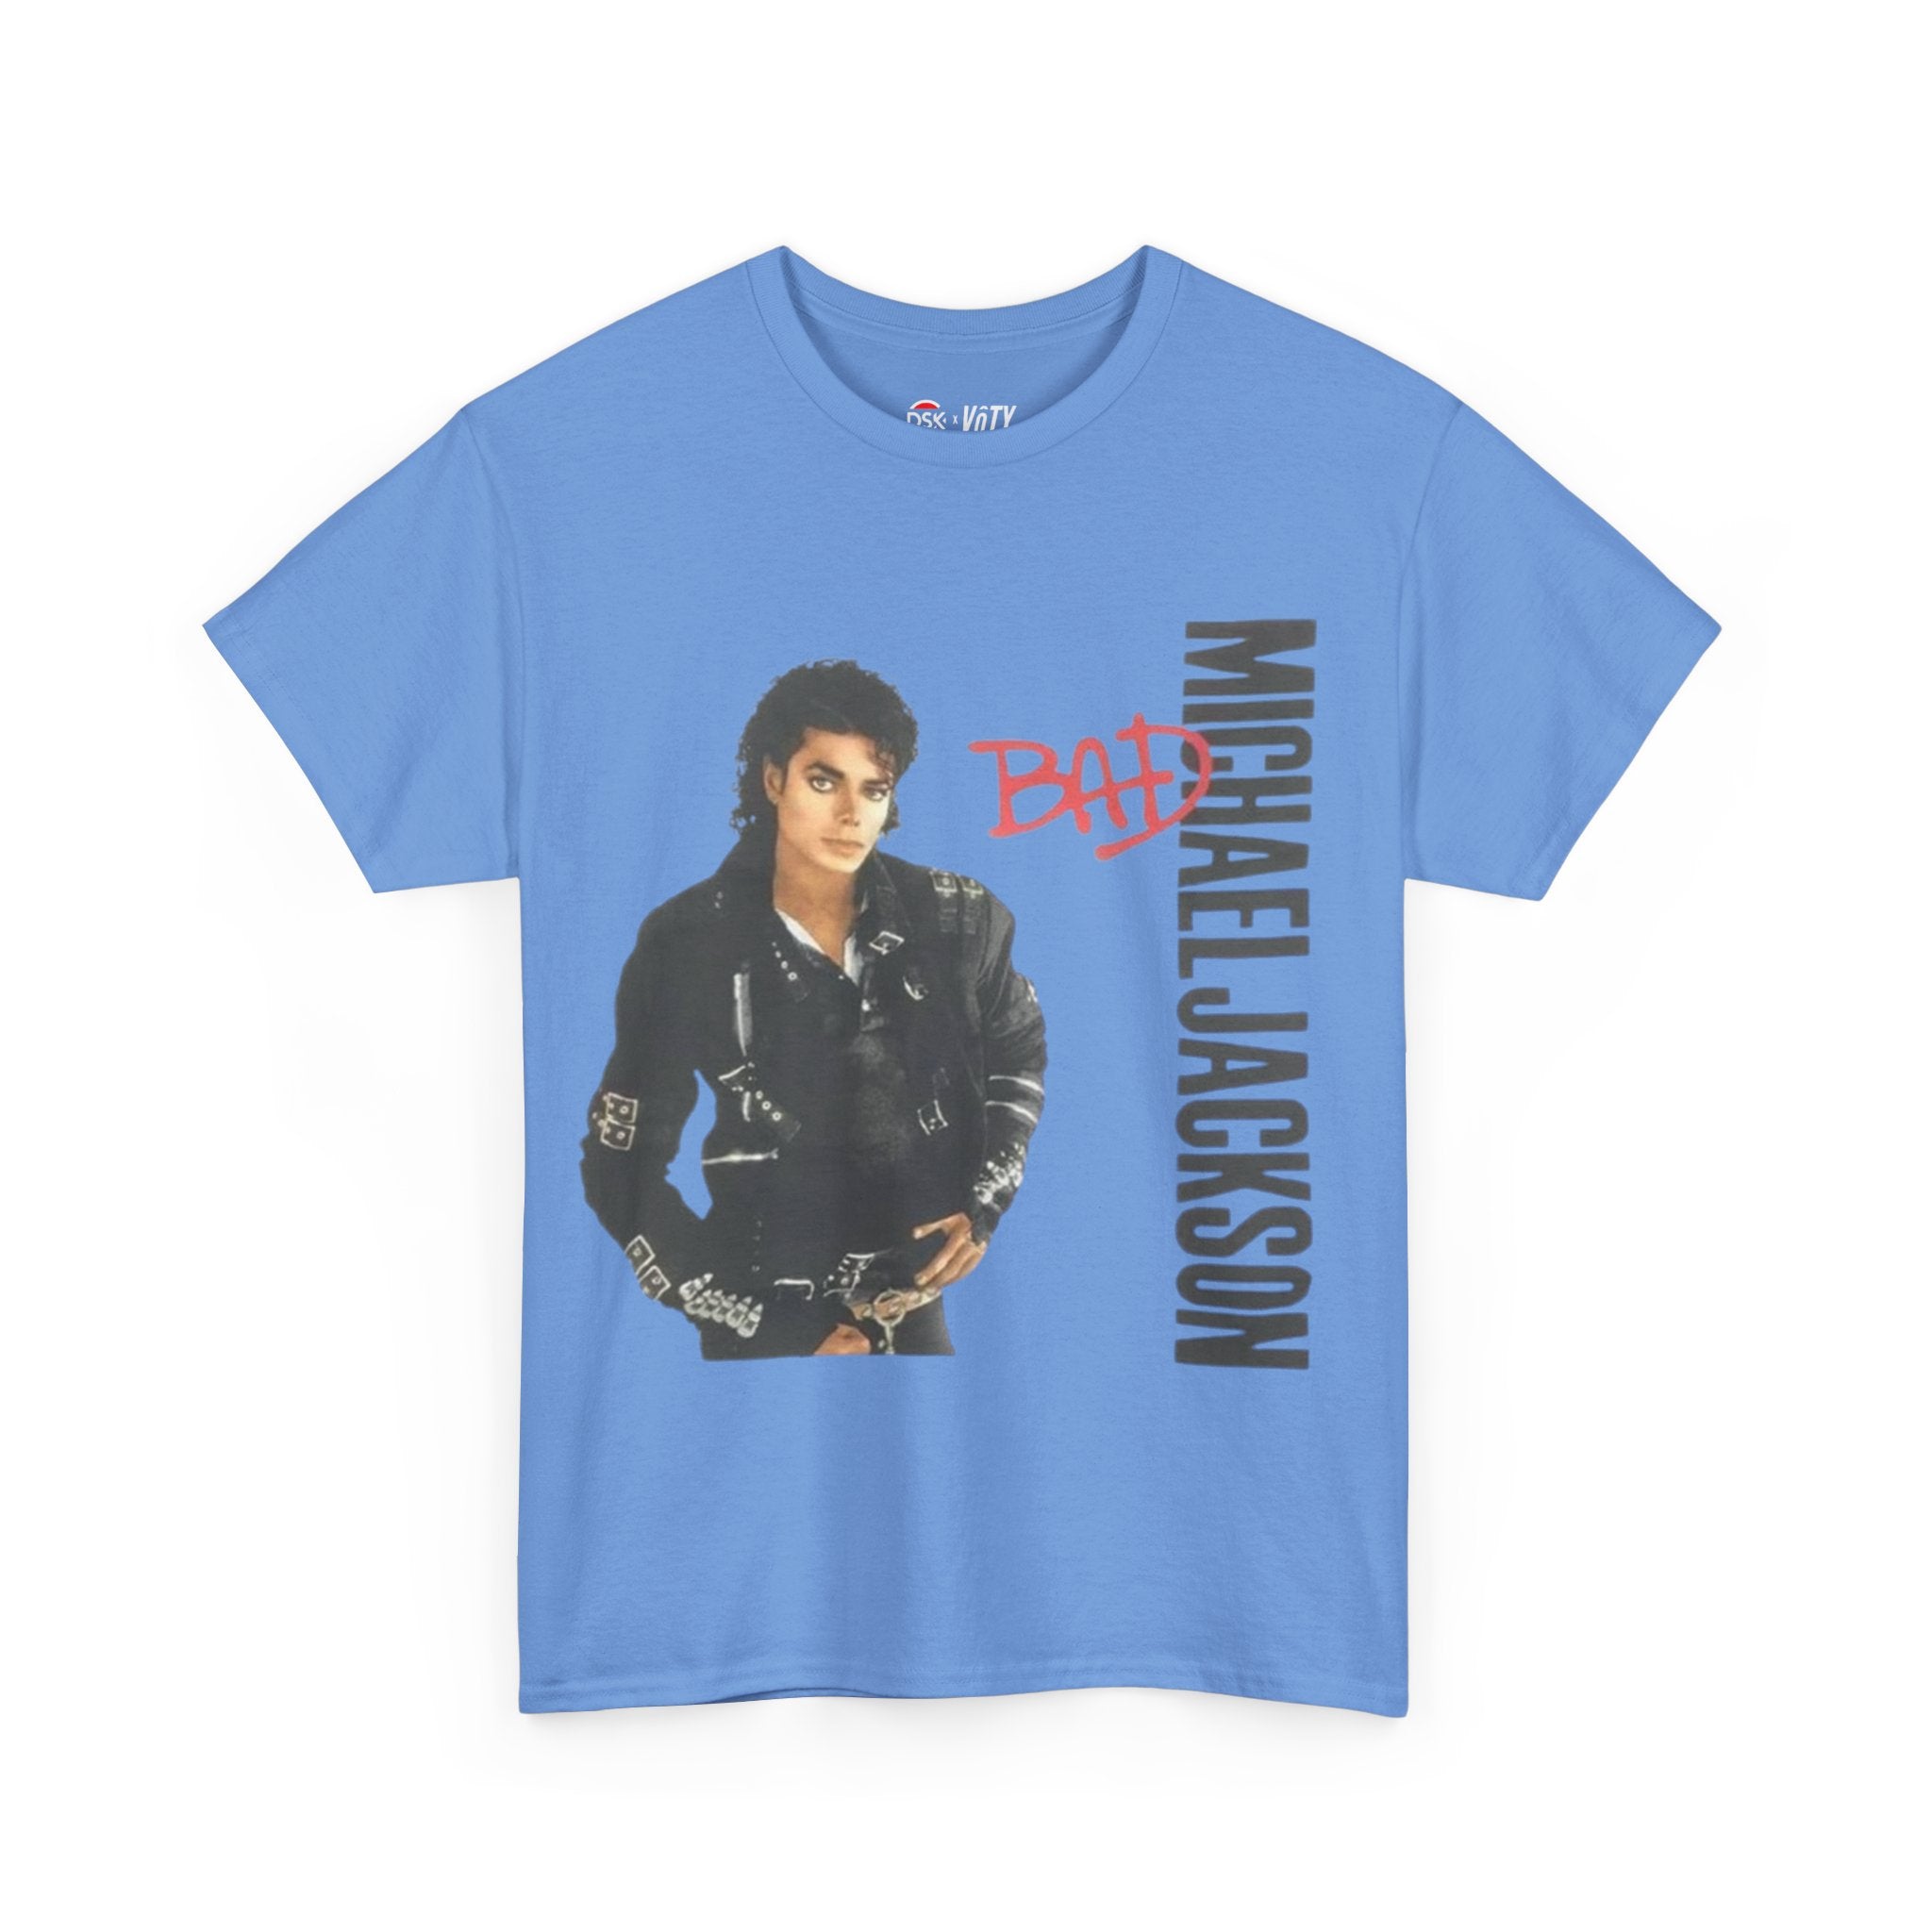 Michael Jackson "Bad" T-Shirt